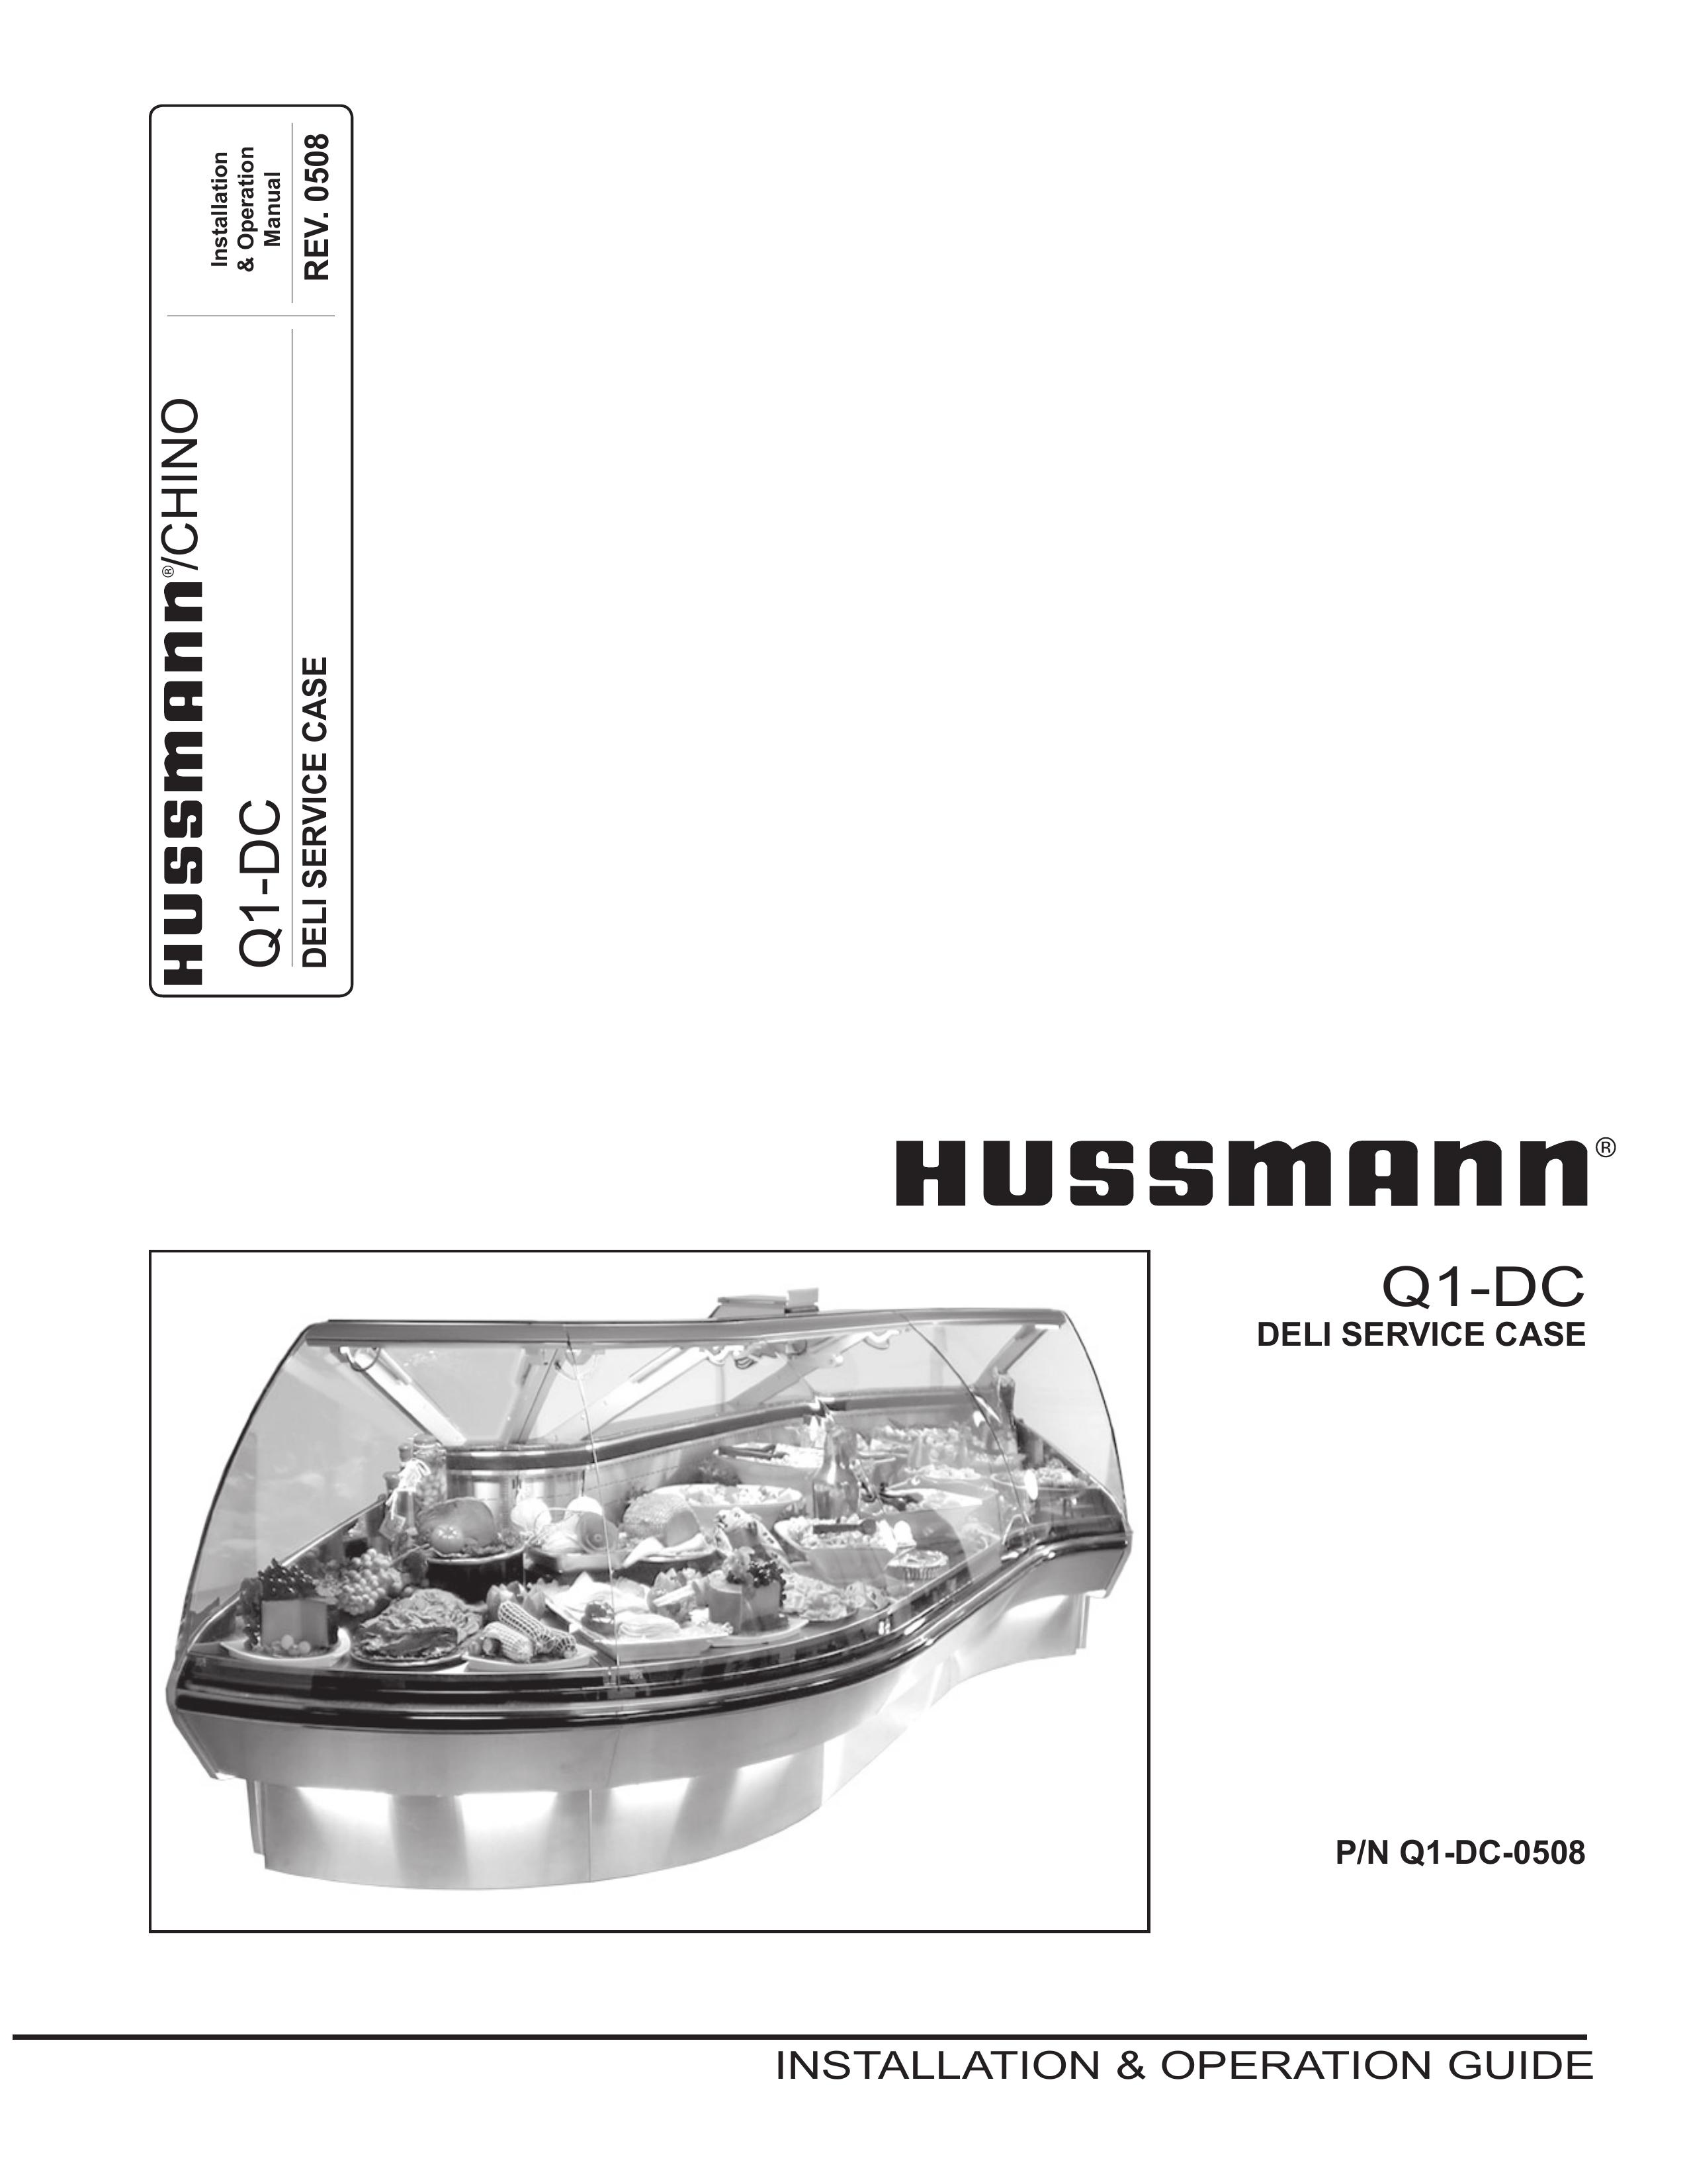 hussman Q1-DC Pill Reminder Device User Manual